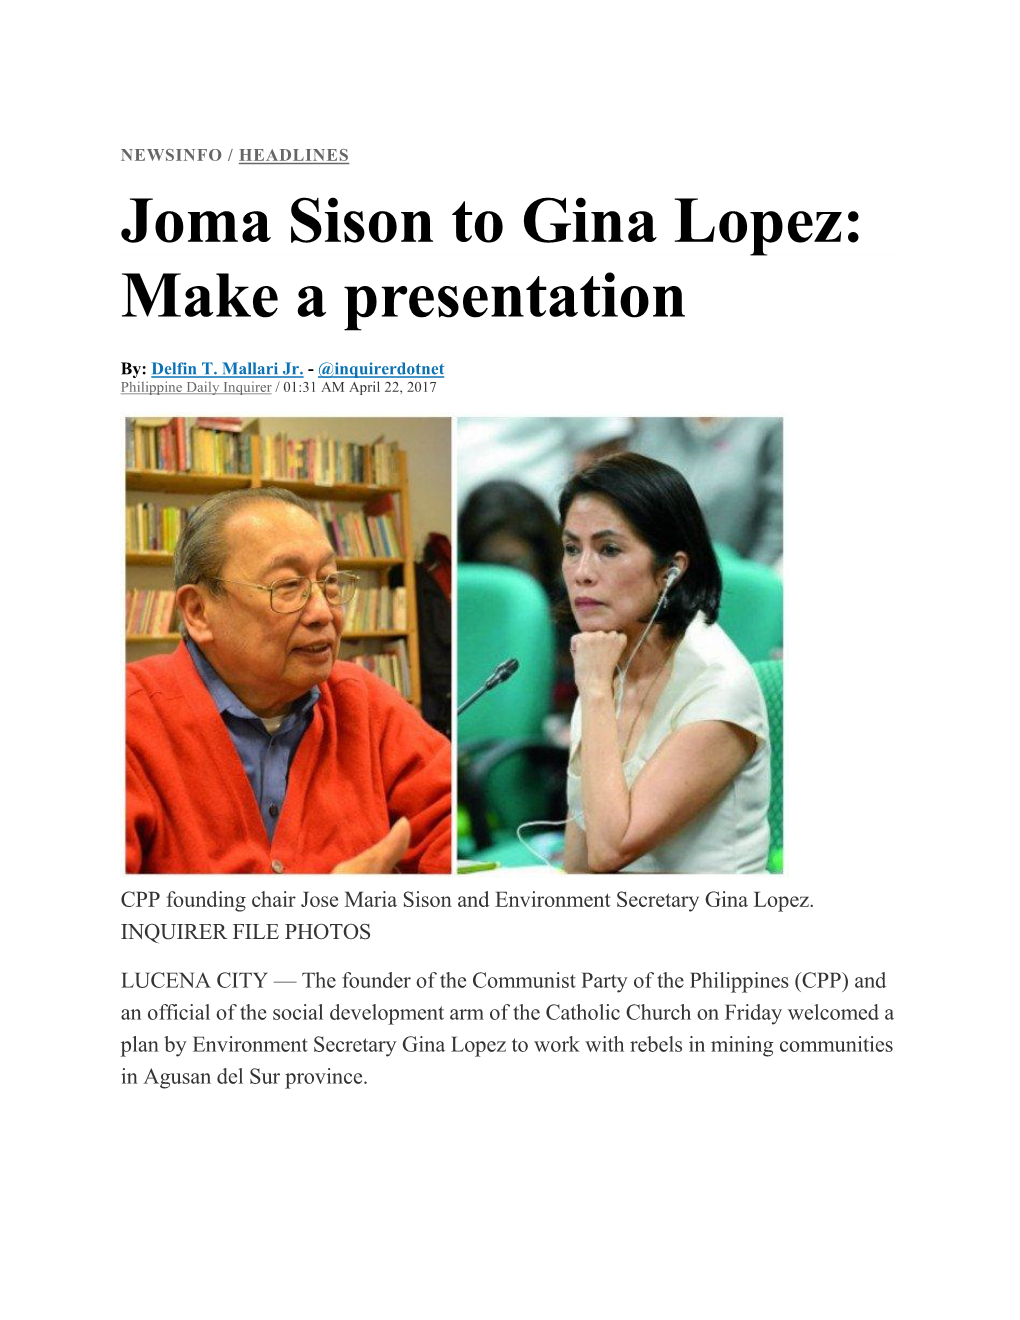 Joma Sison to Gina Lopez: Make a Presentation